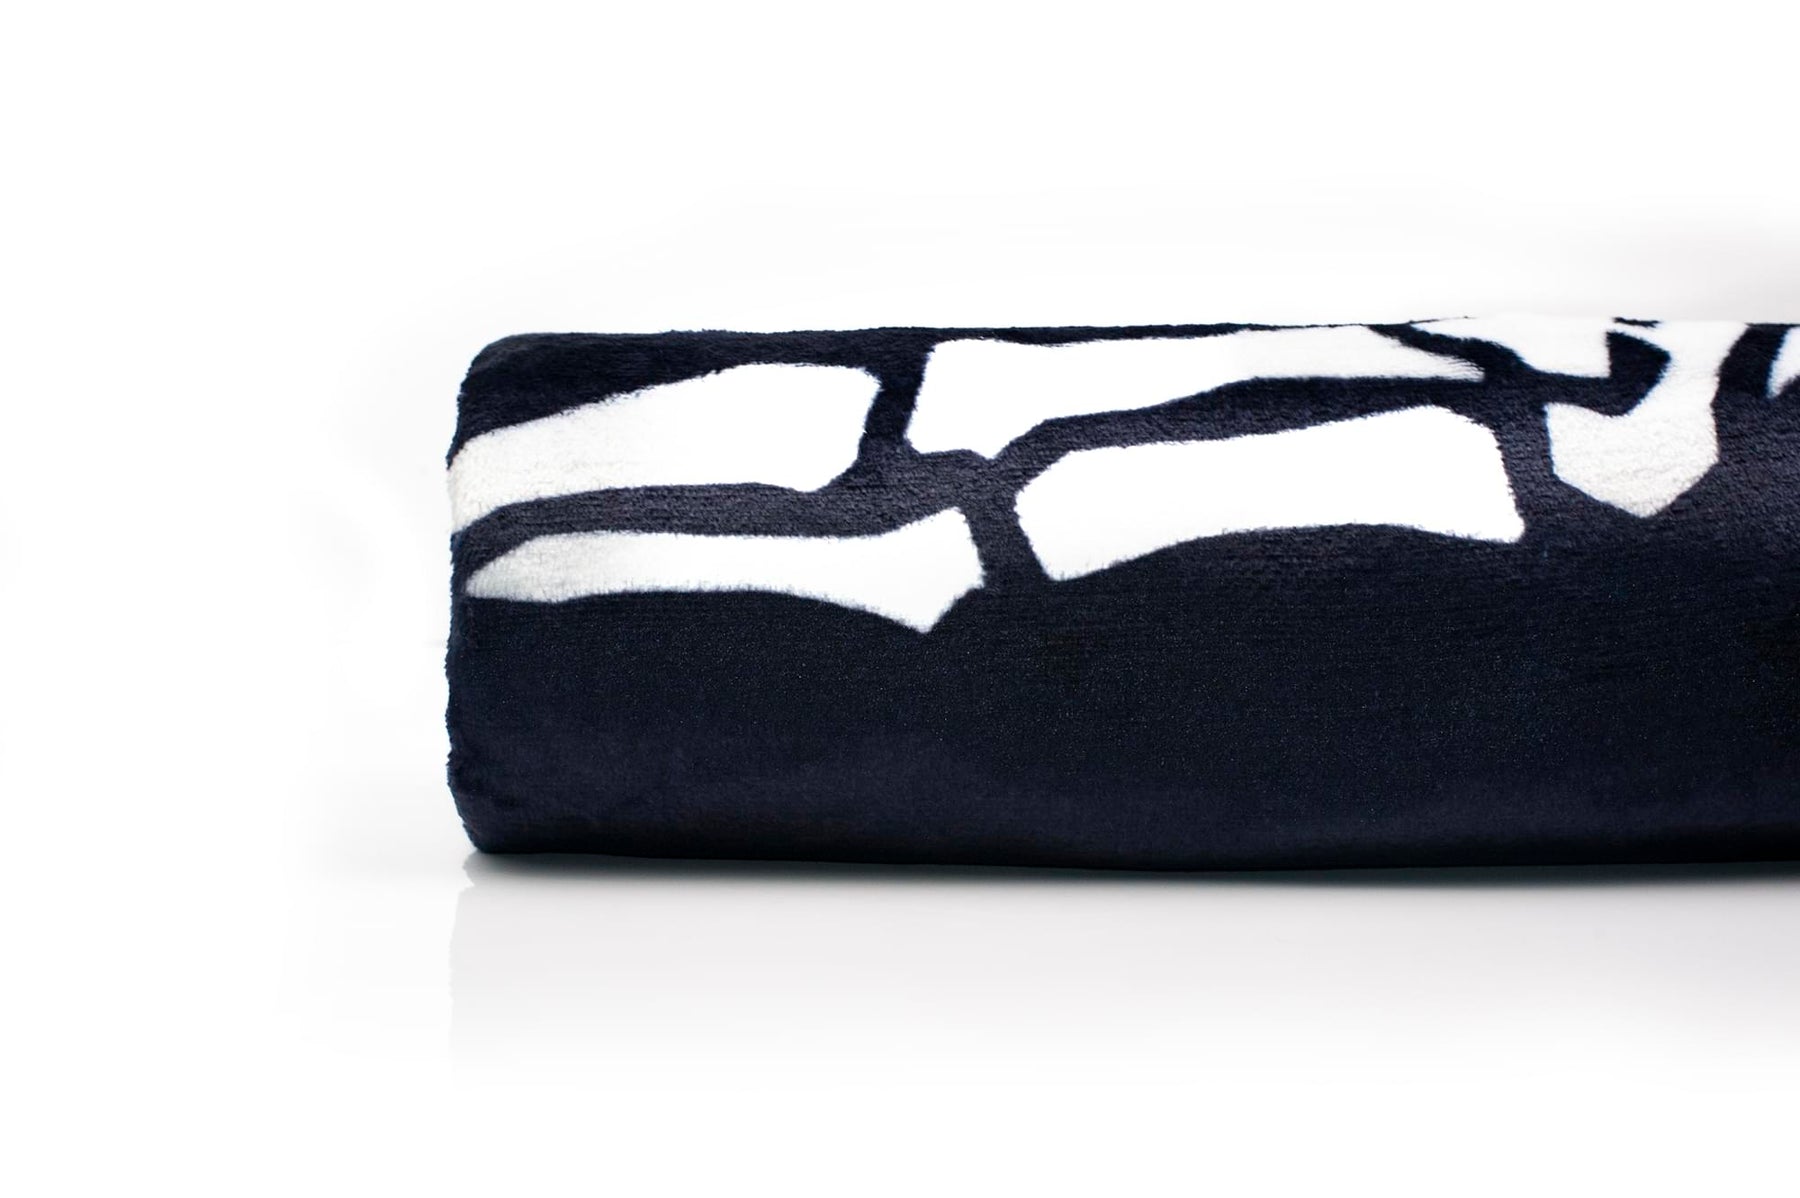 Death Stranding Fragile Express Fleece Throw Blanket | 45 x 60 Inch Cozy Blanket